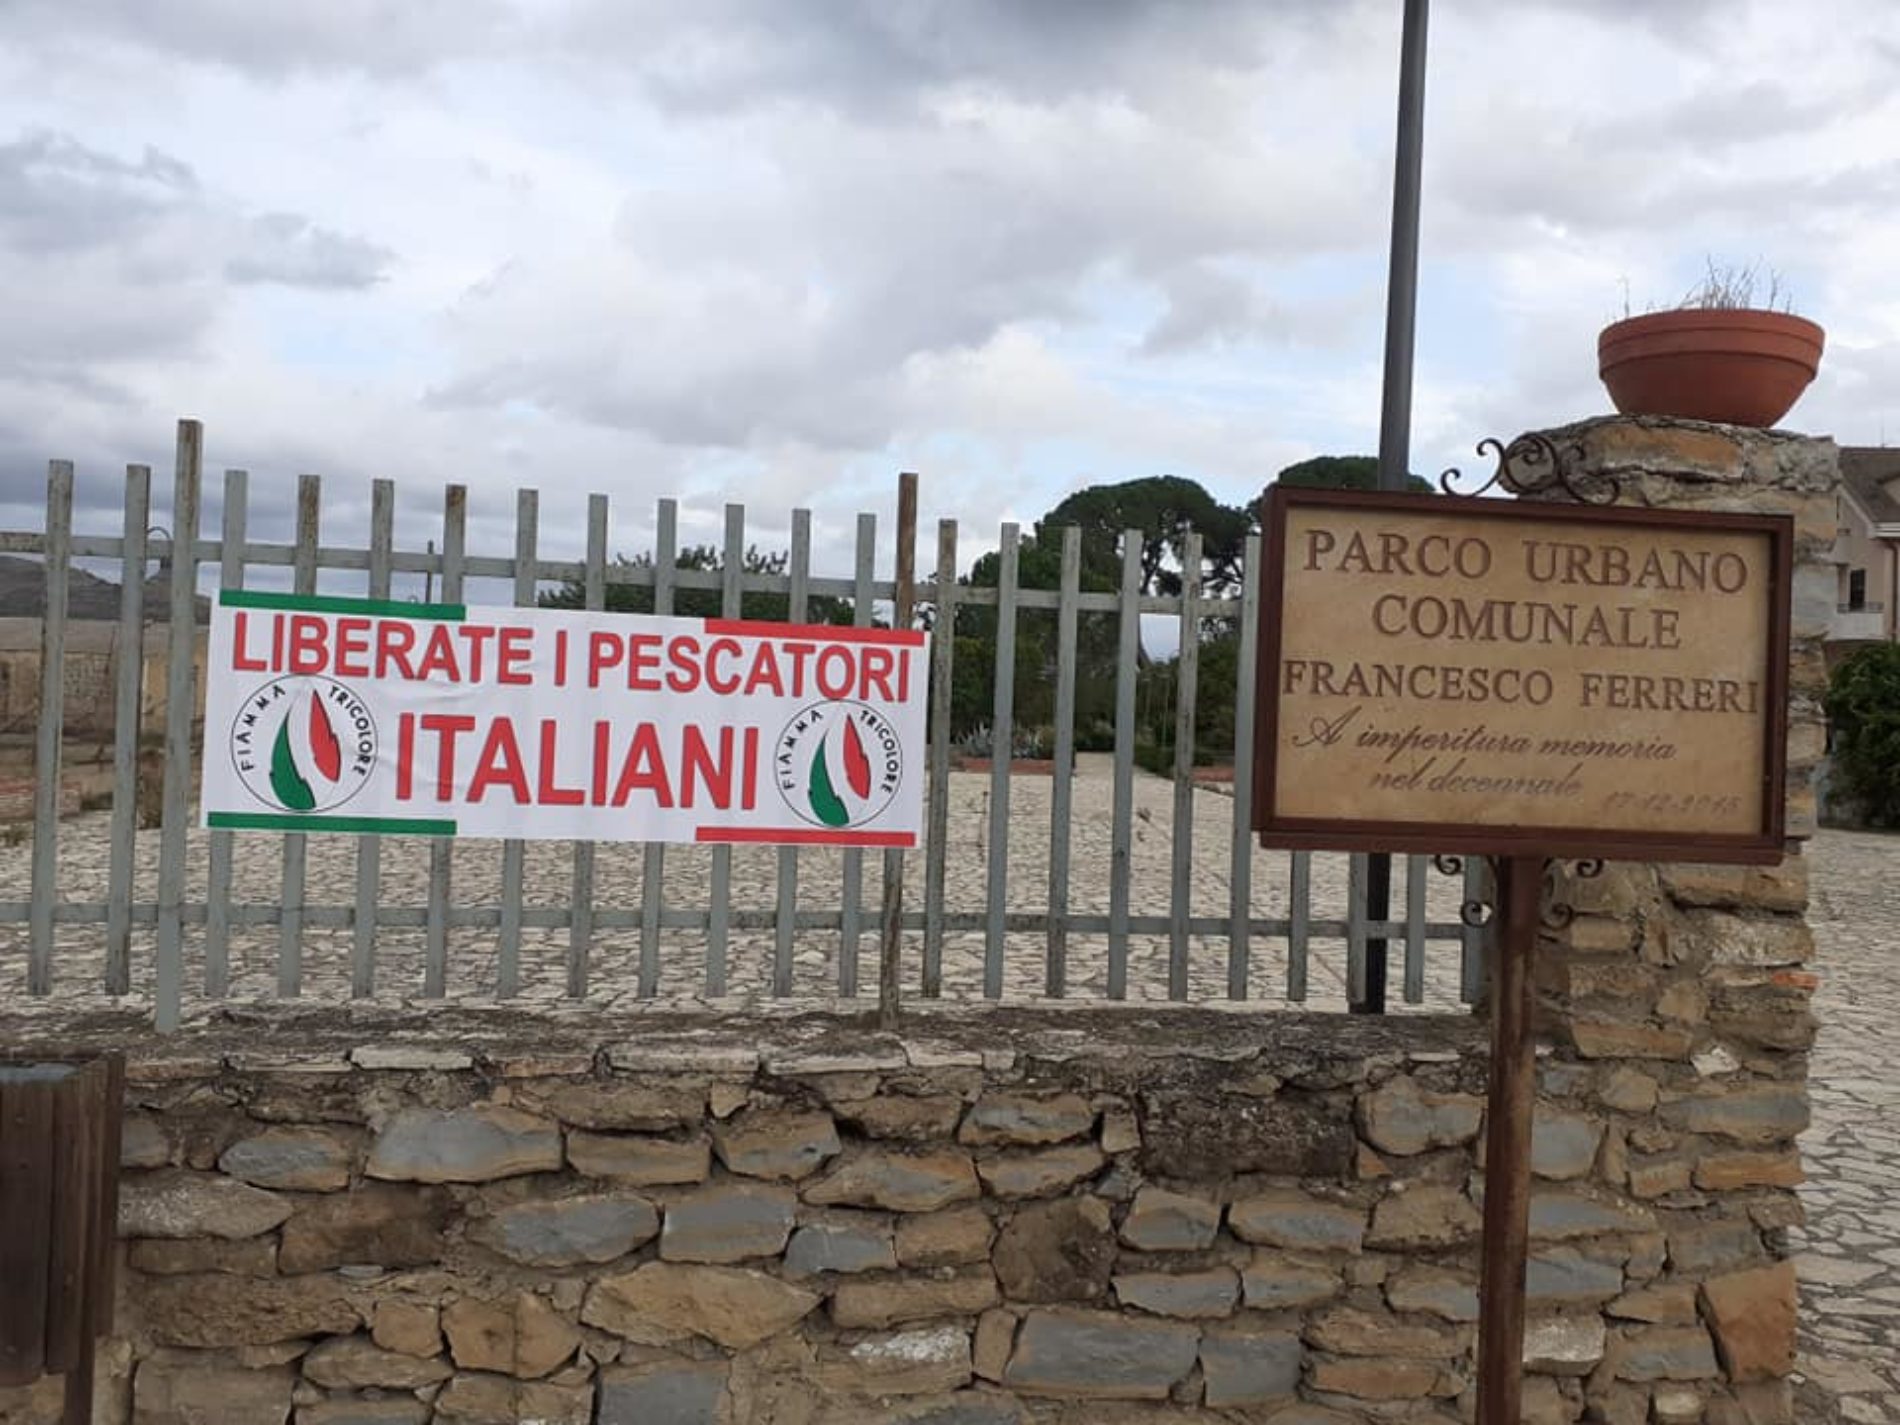 BARRAFRANCA. “Liberate i Pescatori Italiani”